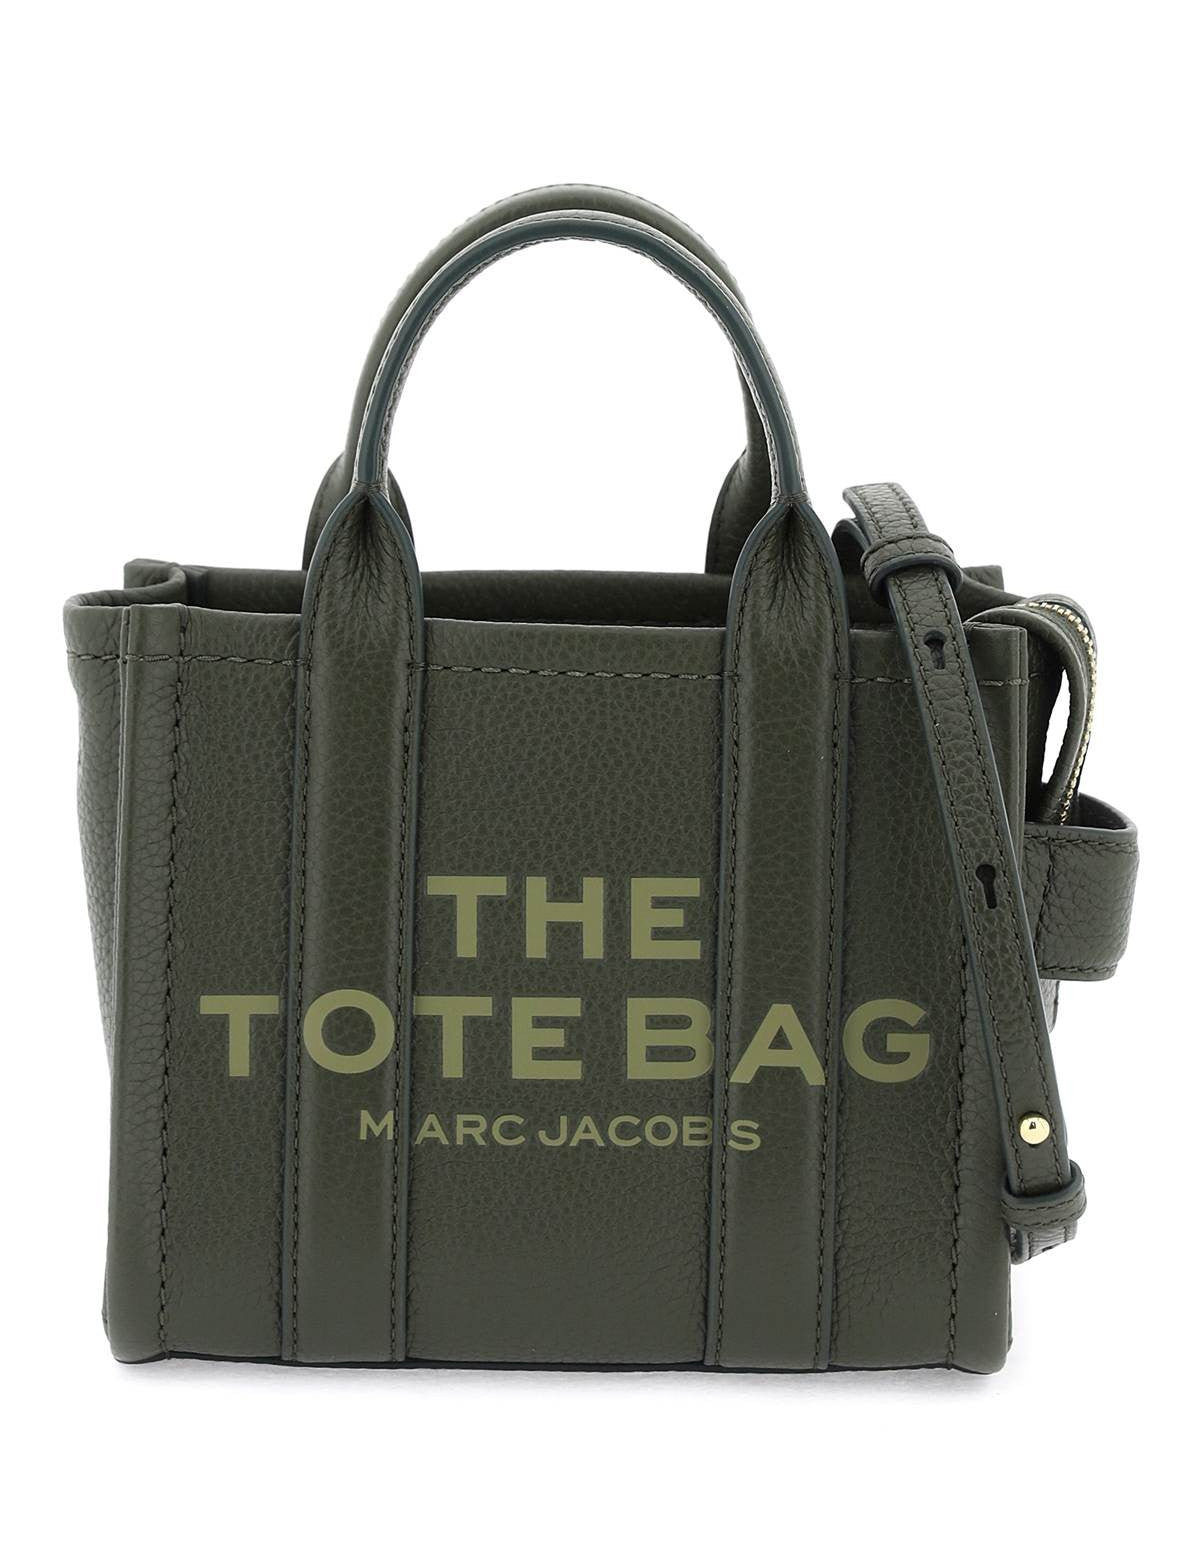 marc-jacobs-the-leather-mini-tote-bag_e7137cc3-4d40-45ad-aca5-0a56378ba8b4.jpg